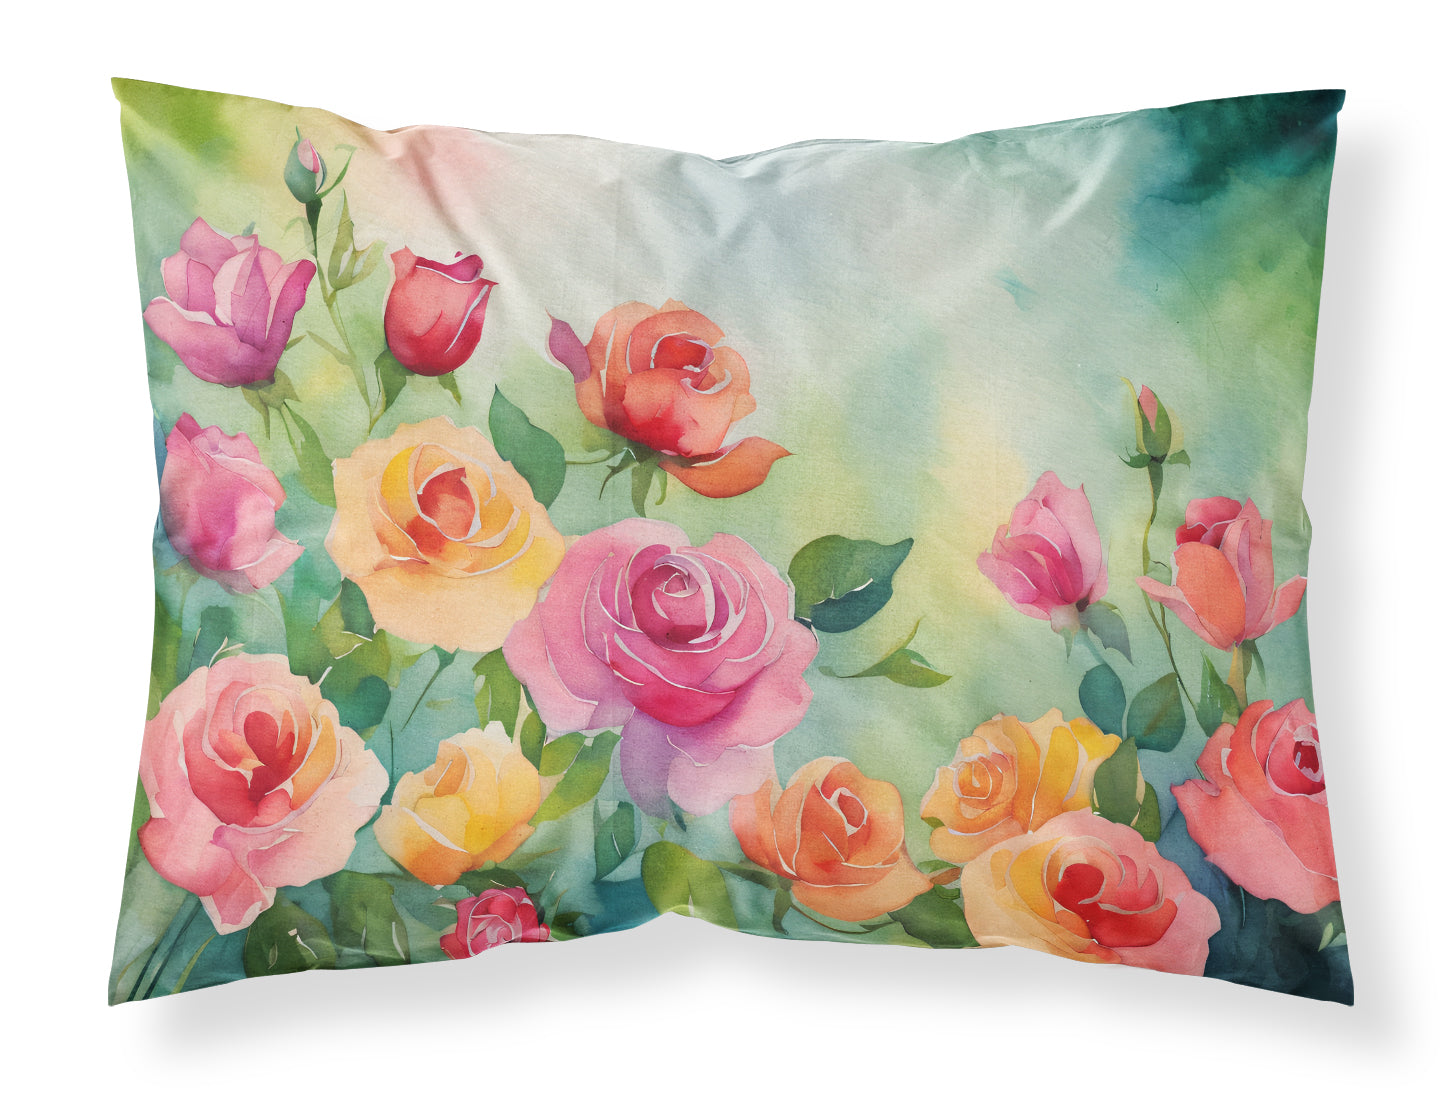 Buy this Roses in Watercolor Fabric Standard Pillowcase